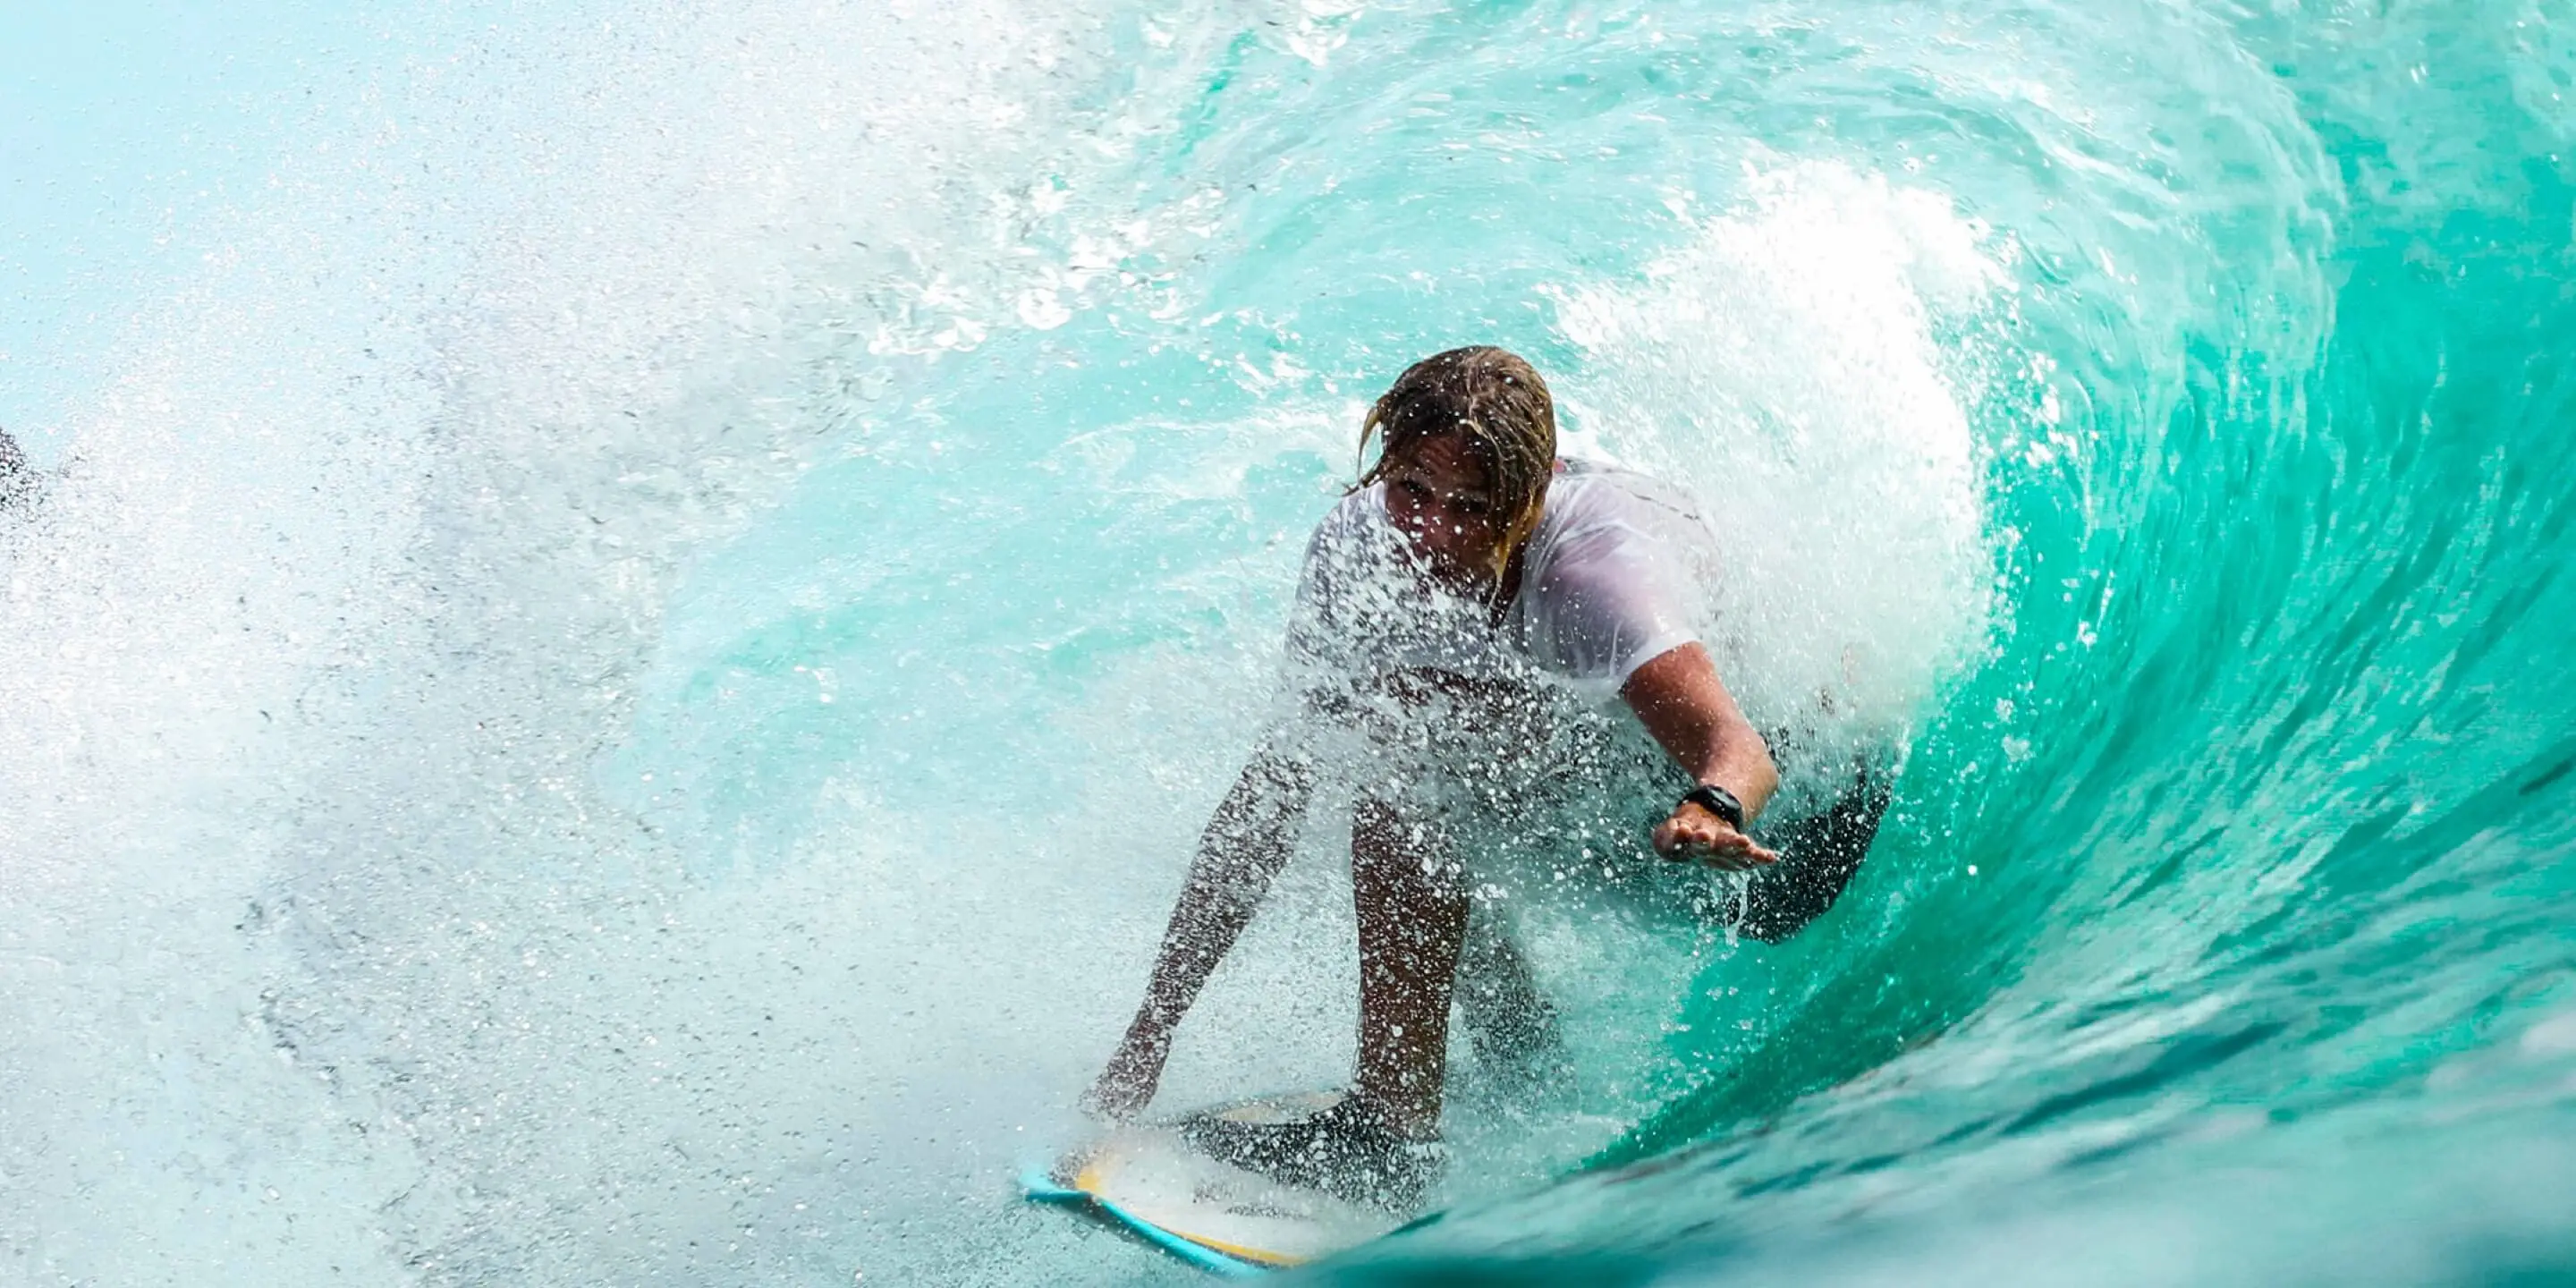 man shreds wave on surfboard